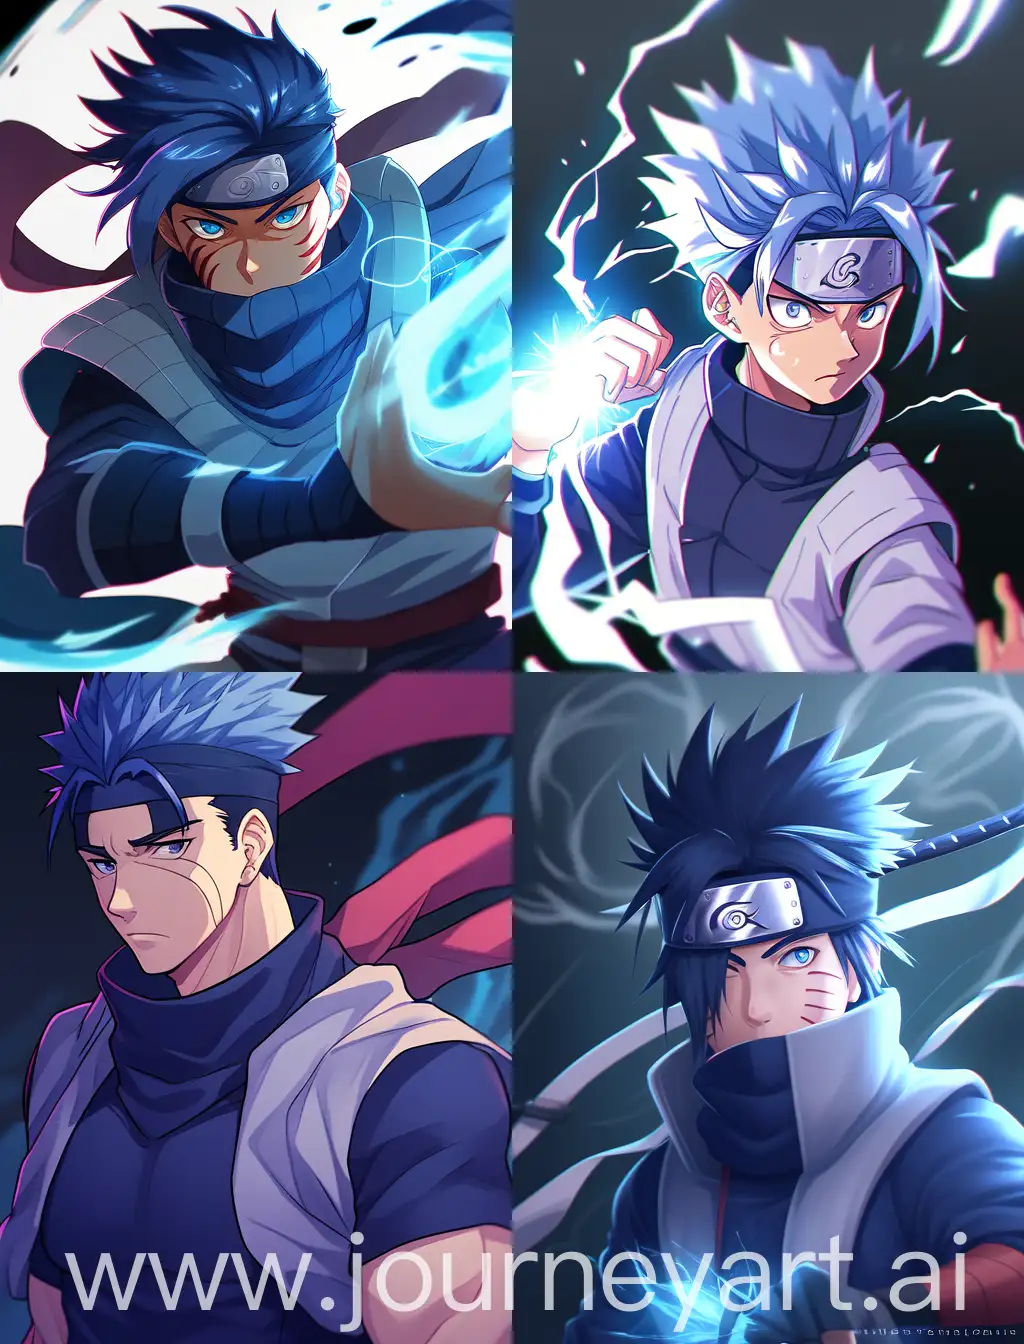 Blue-Haired-Jonin-from-Naruto-Niji-4-Artwork